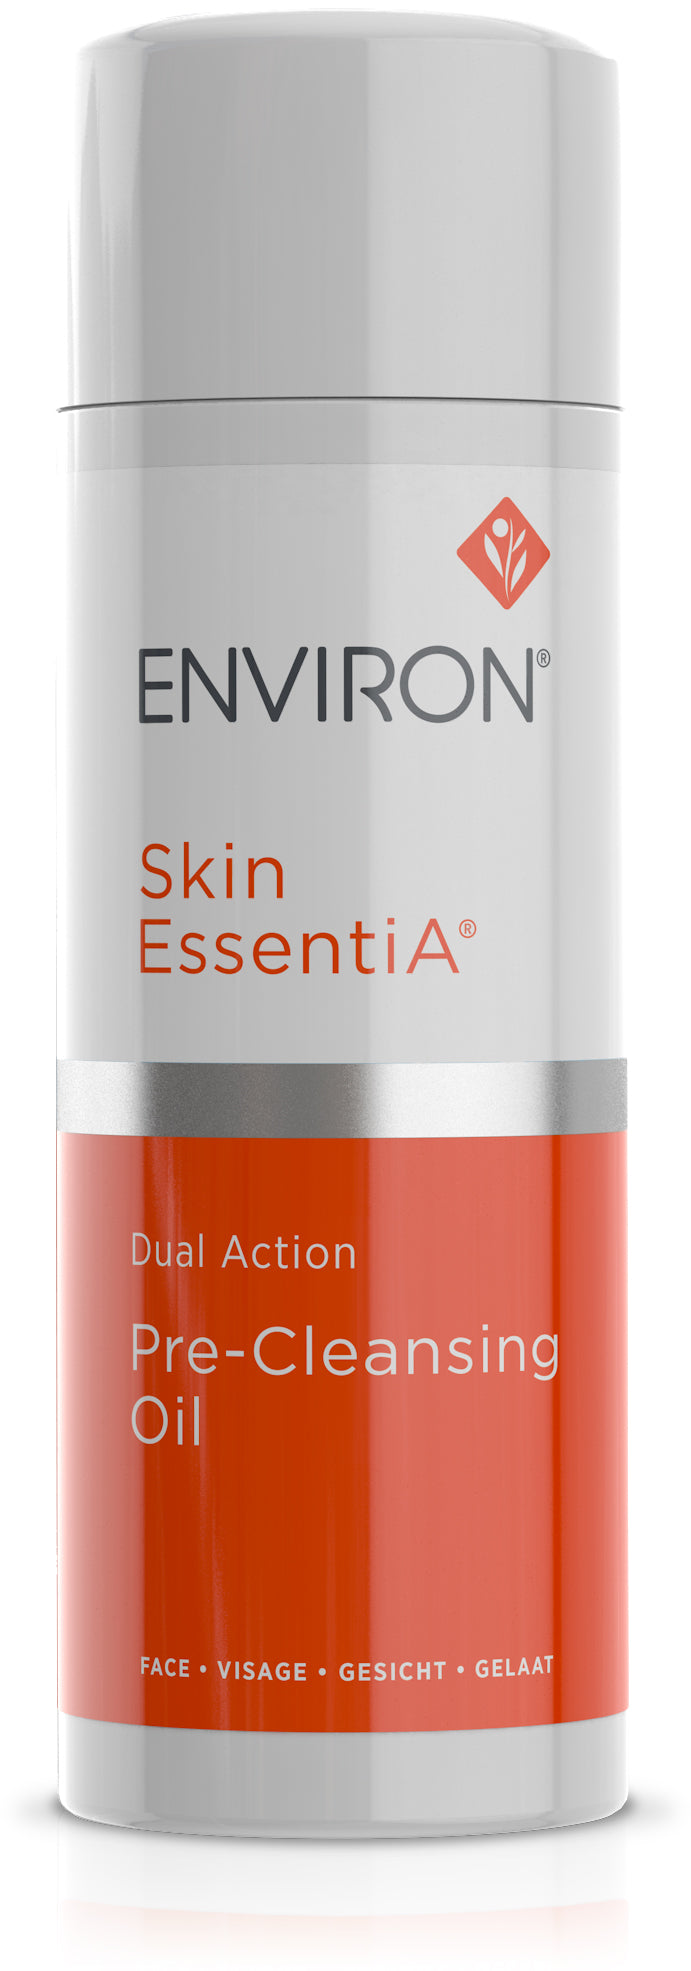 Skin EssentiA | Dual Action | Pre-Cleansing Oil